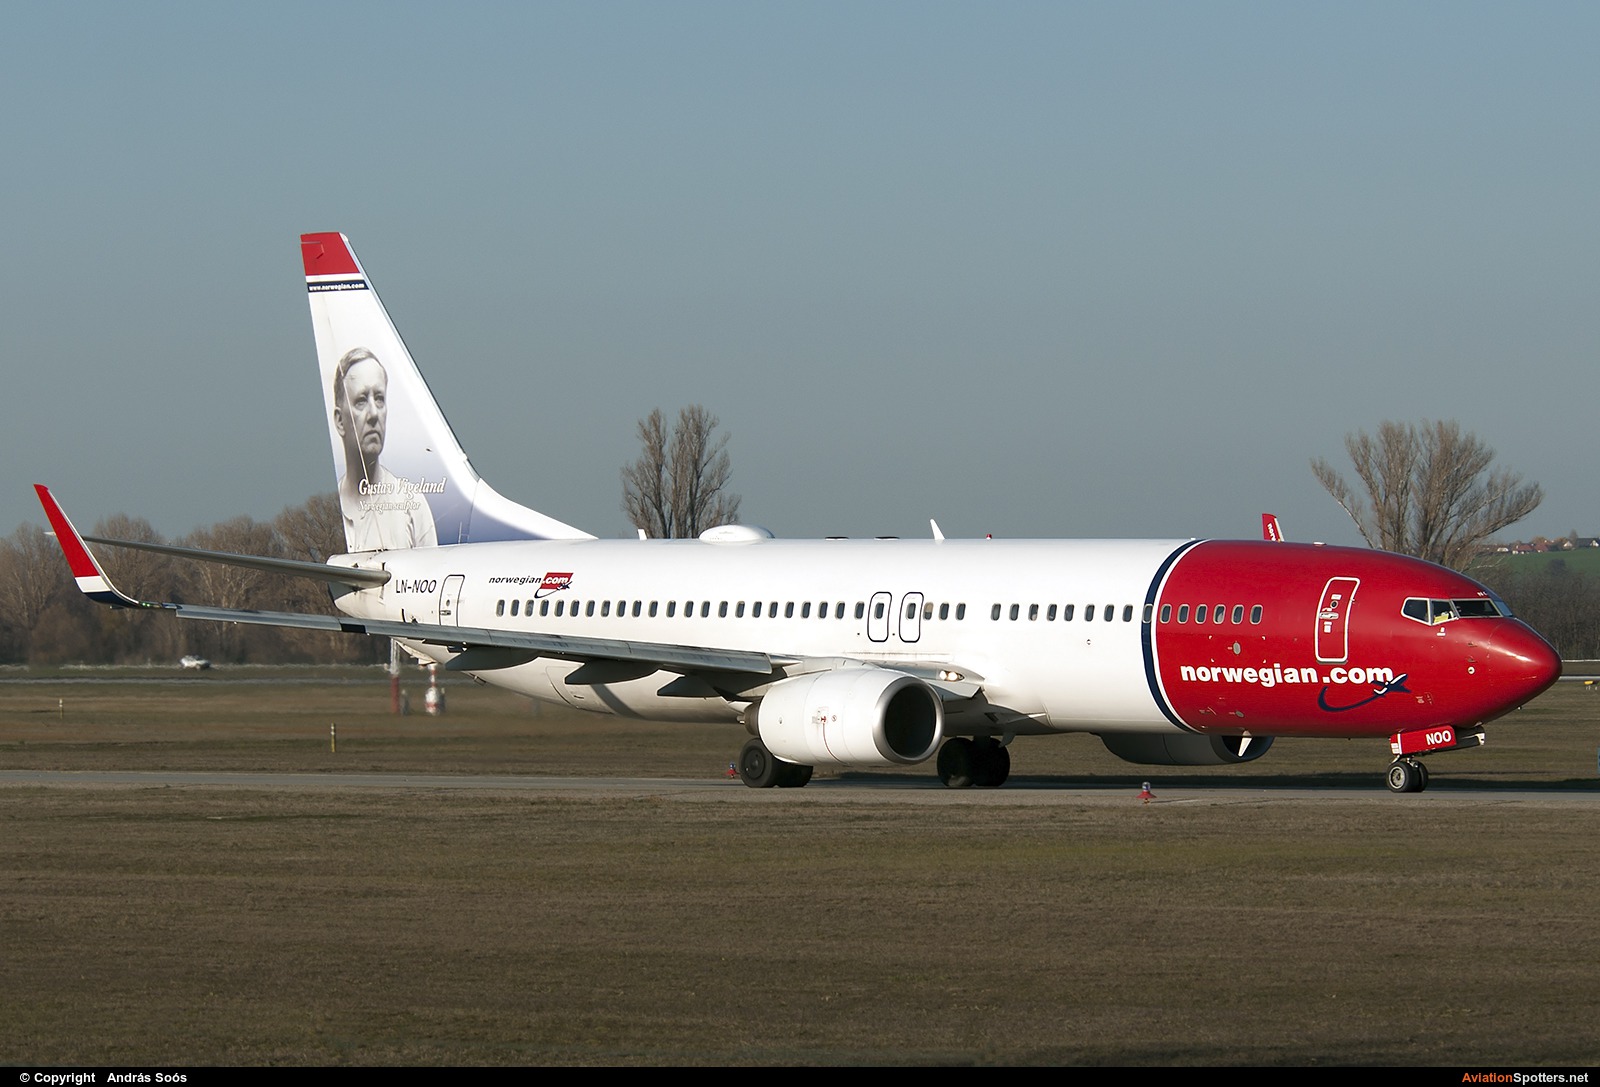 Norwegian Air Shuttle  -  737-800  (LN-NOO) By András Soós (sas1965)